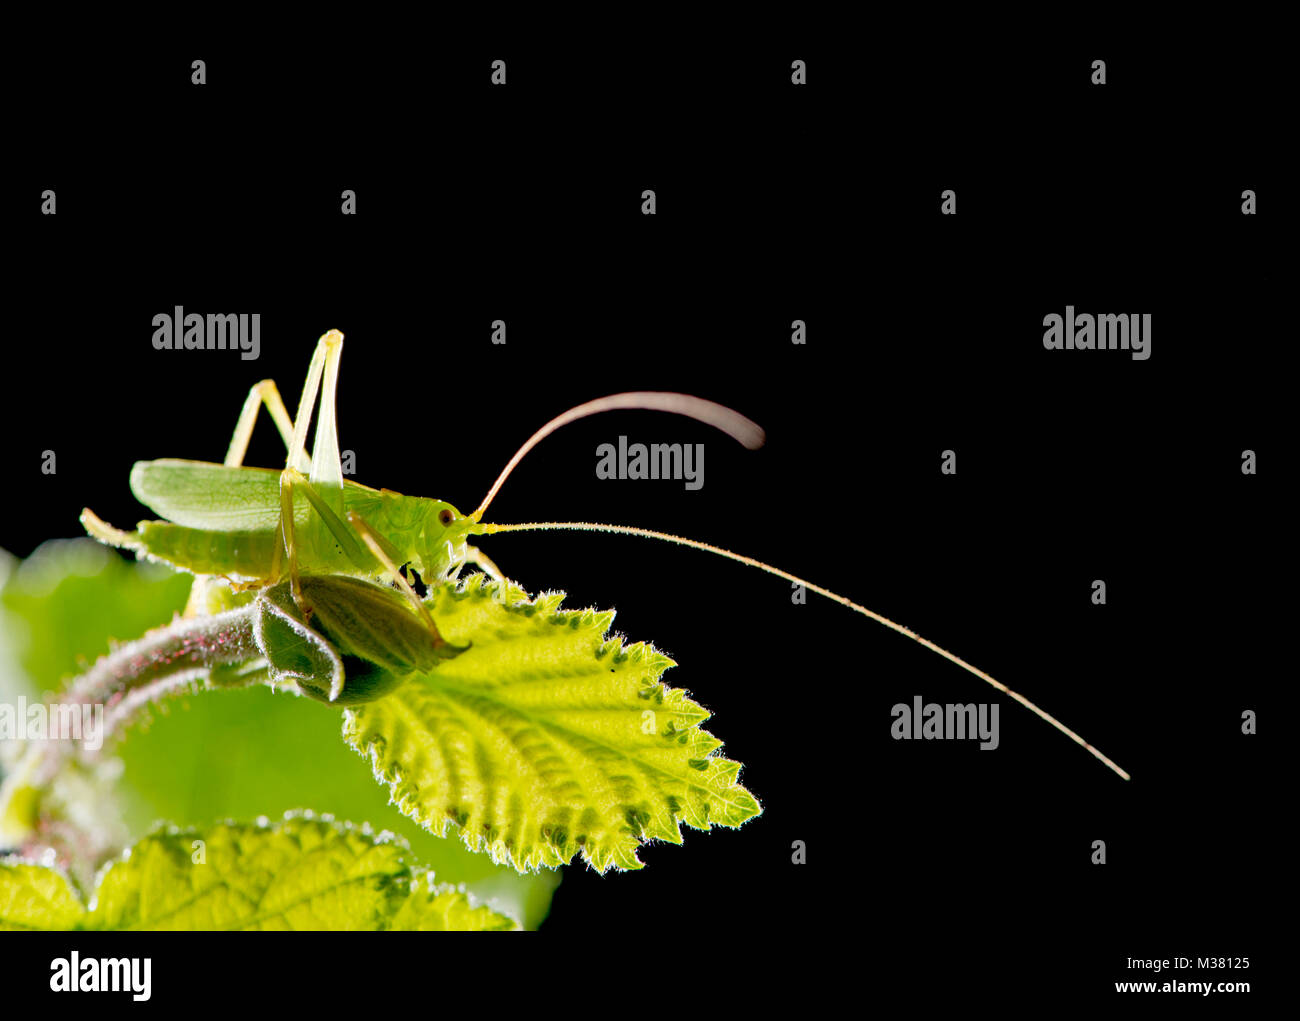 Bush-Cricket: unid sp. Family: Tettigoniidae. Showing long antennae. Stock Photo